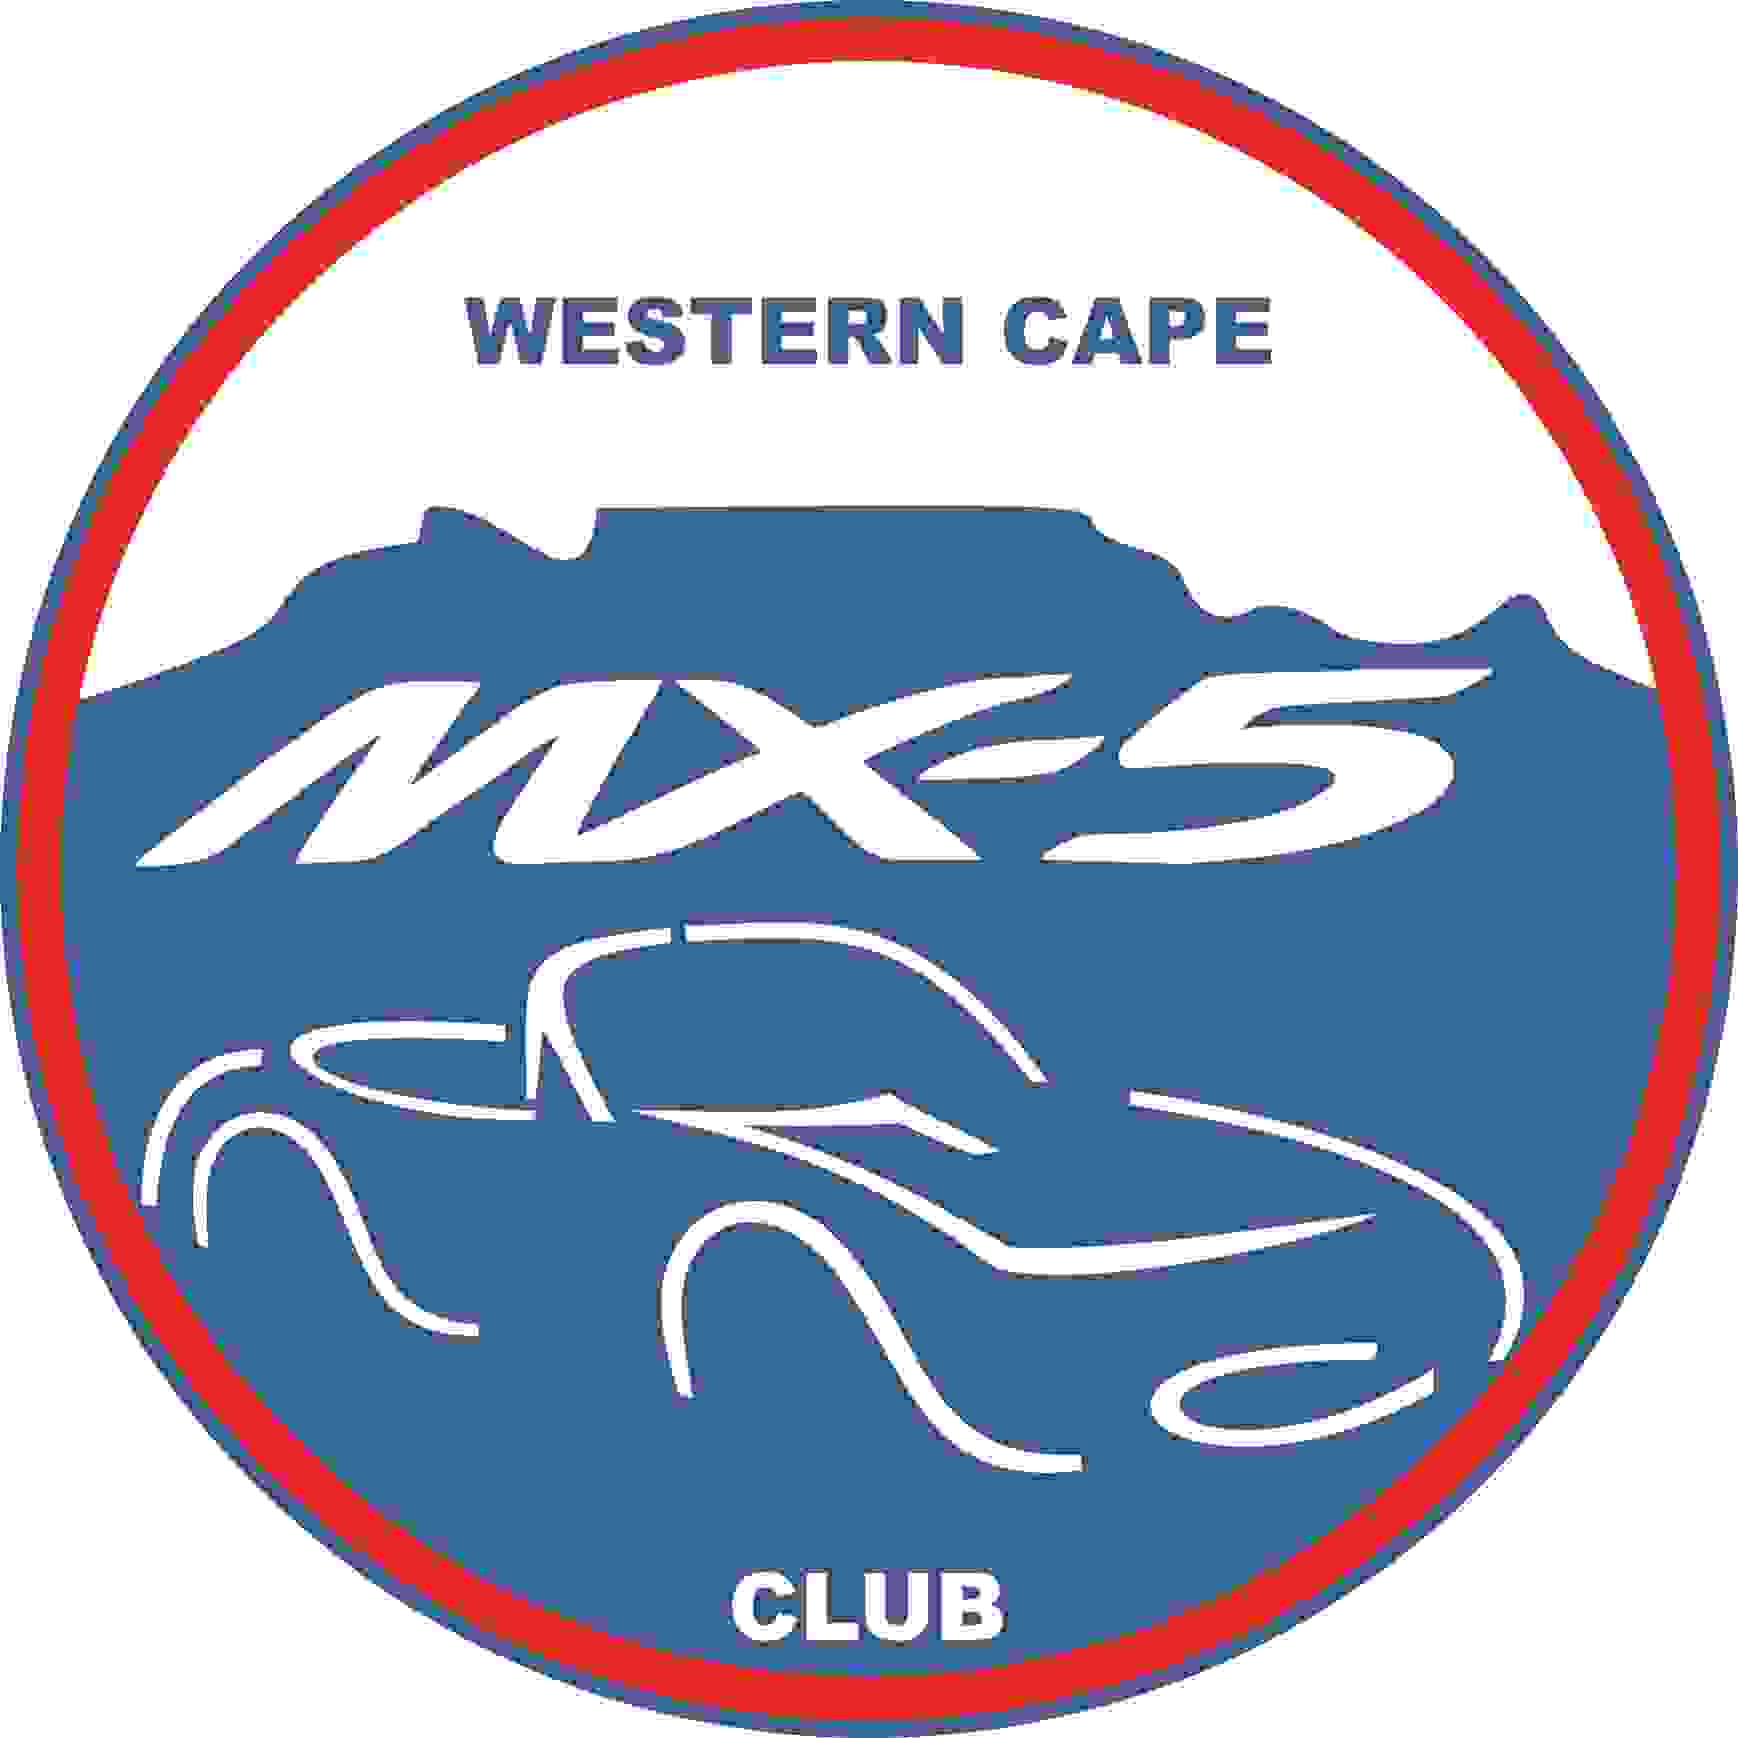 Western Cape Mazda MX-5 Club outing (6)